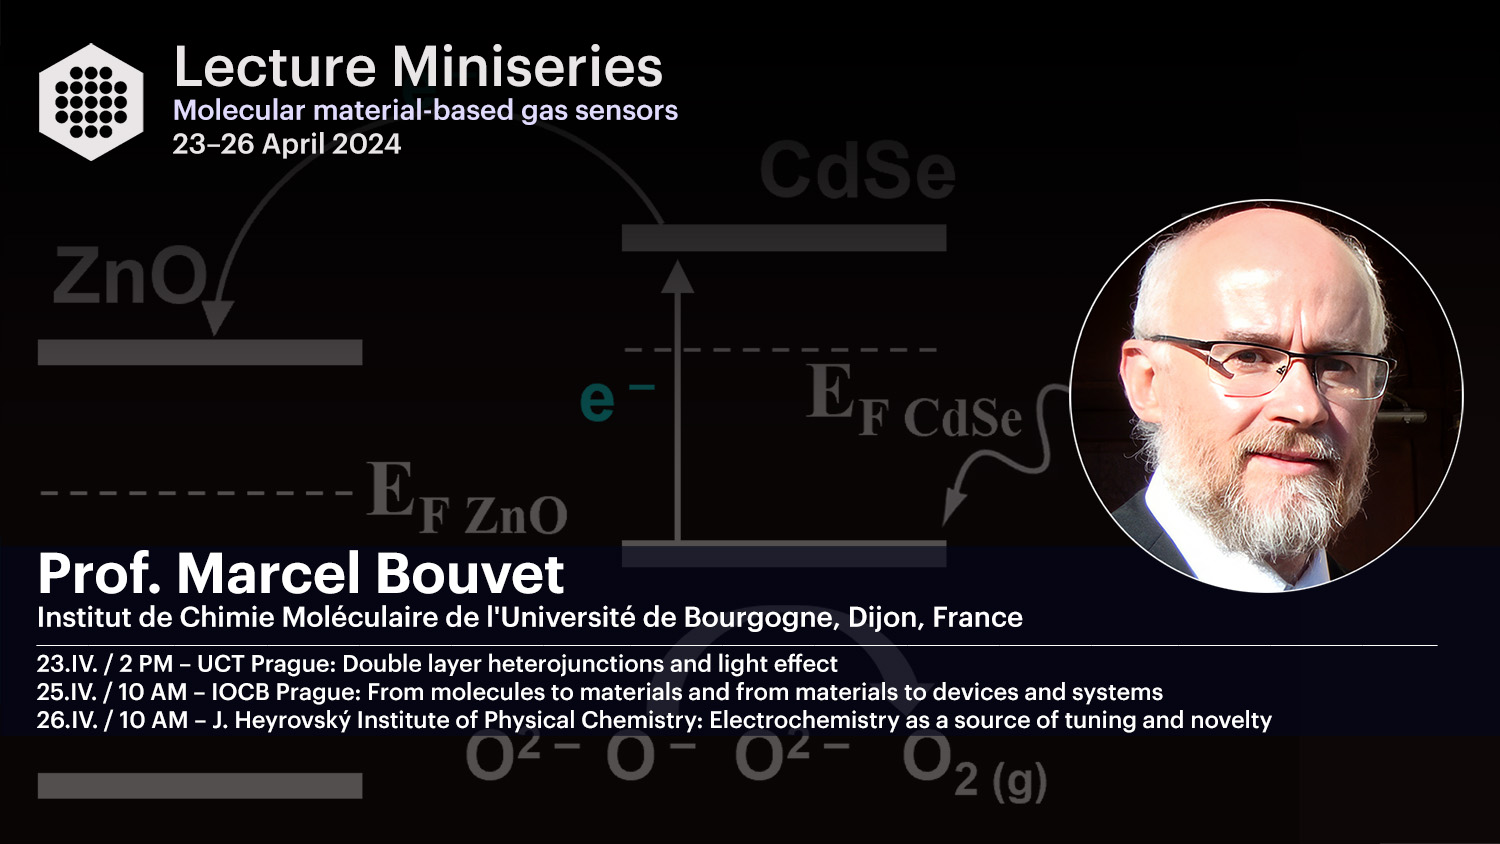 Marcel Bouvet: Molecular material-based gas sensors (Lecture miniseries)